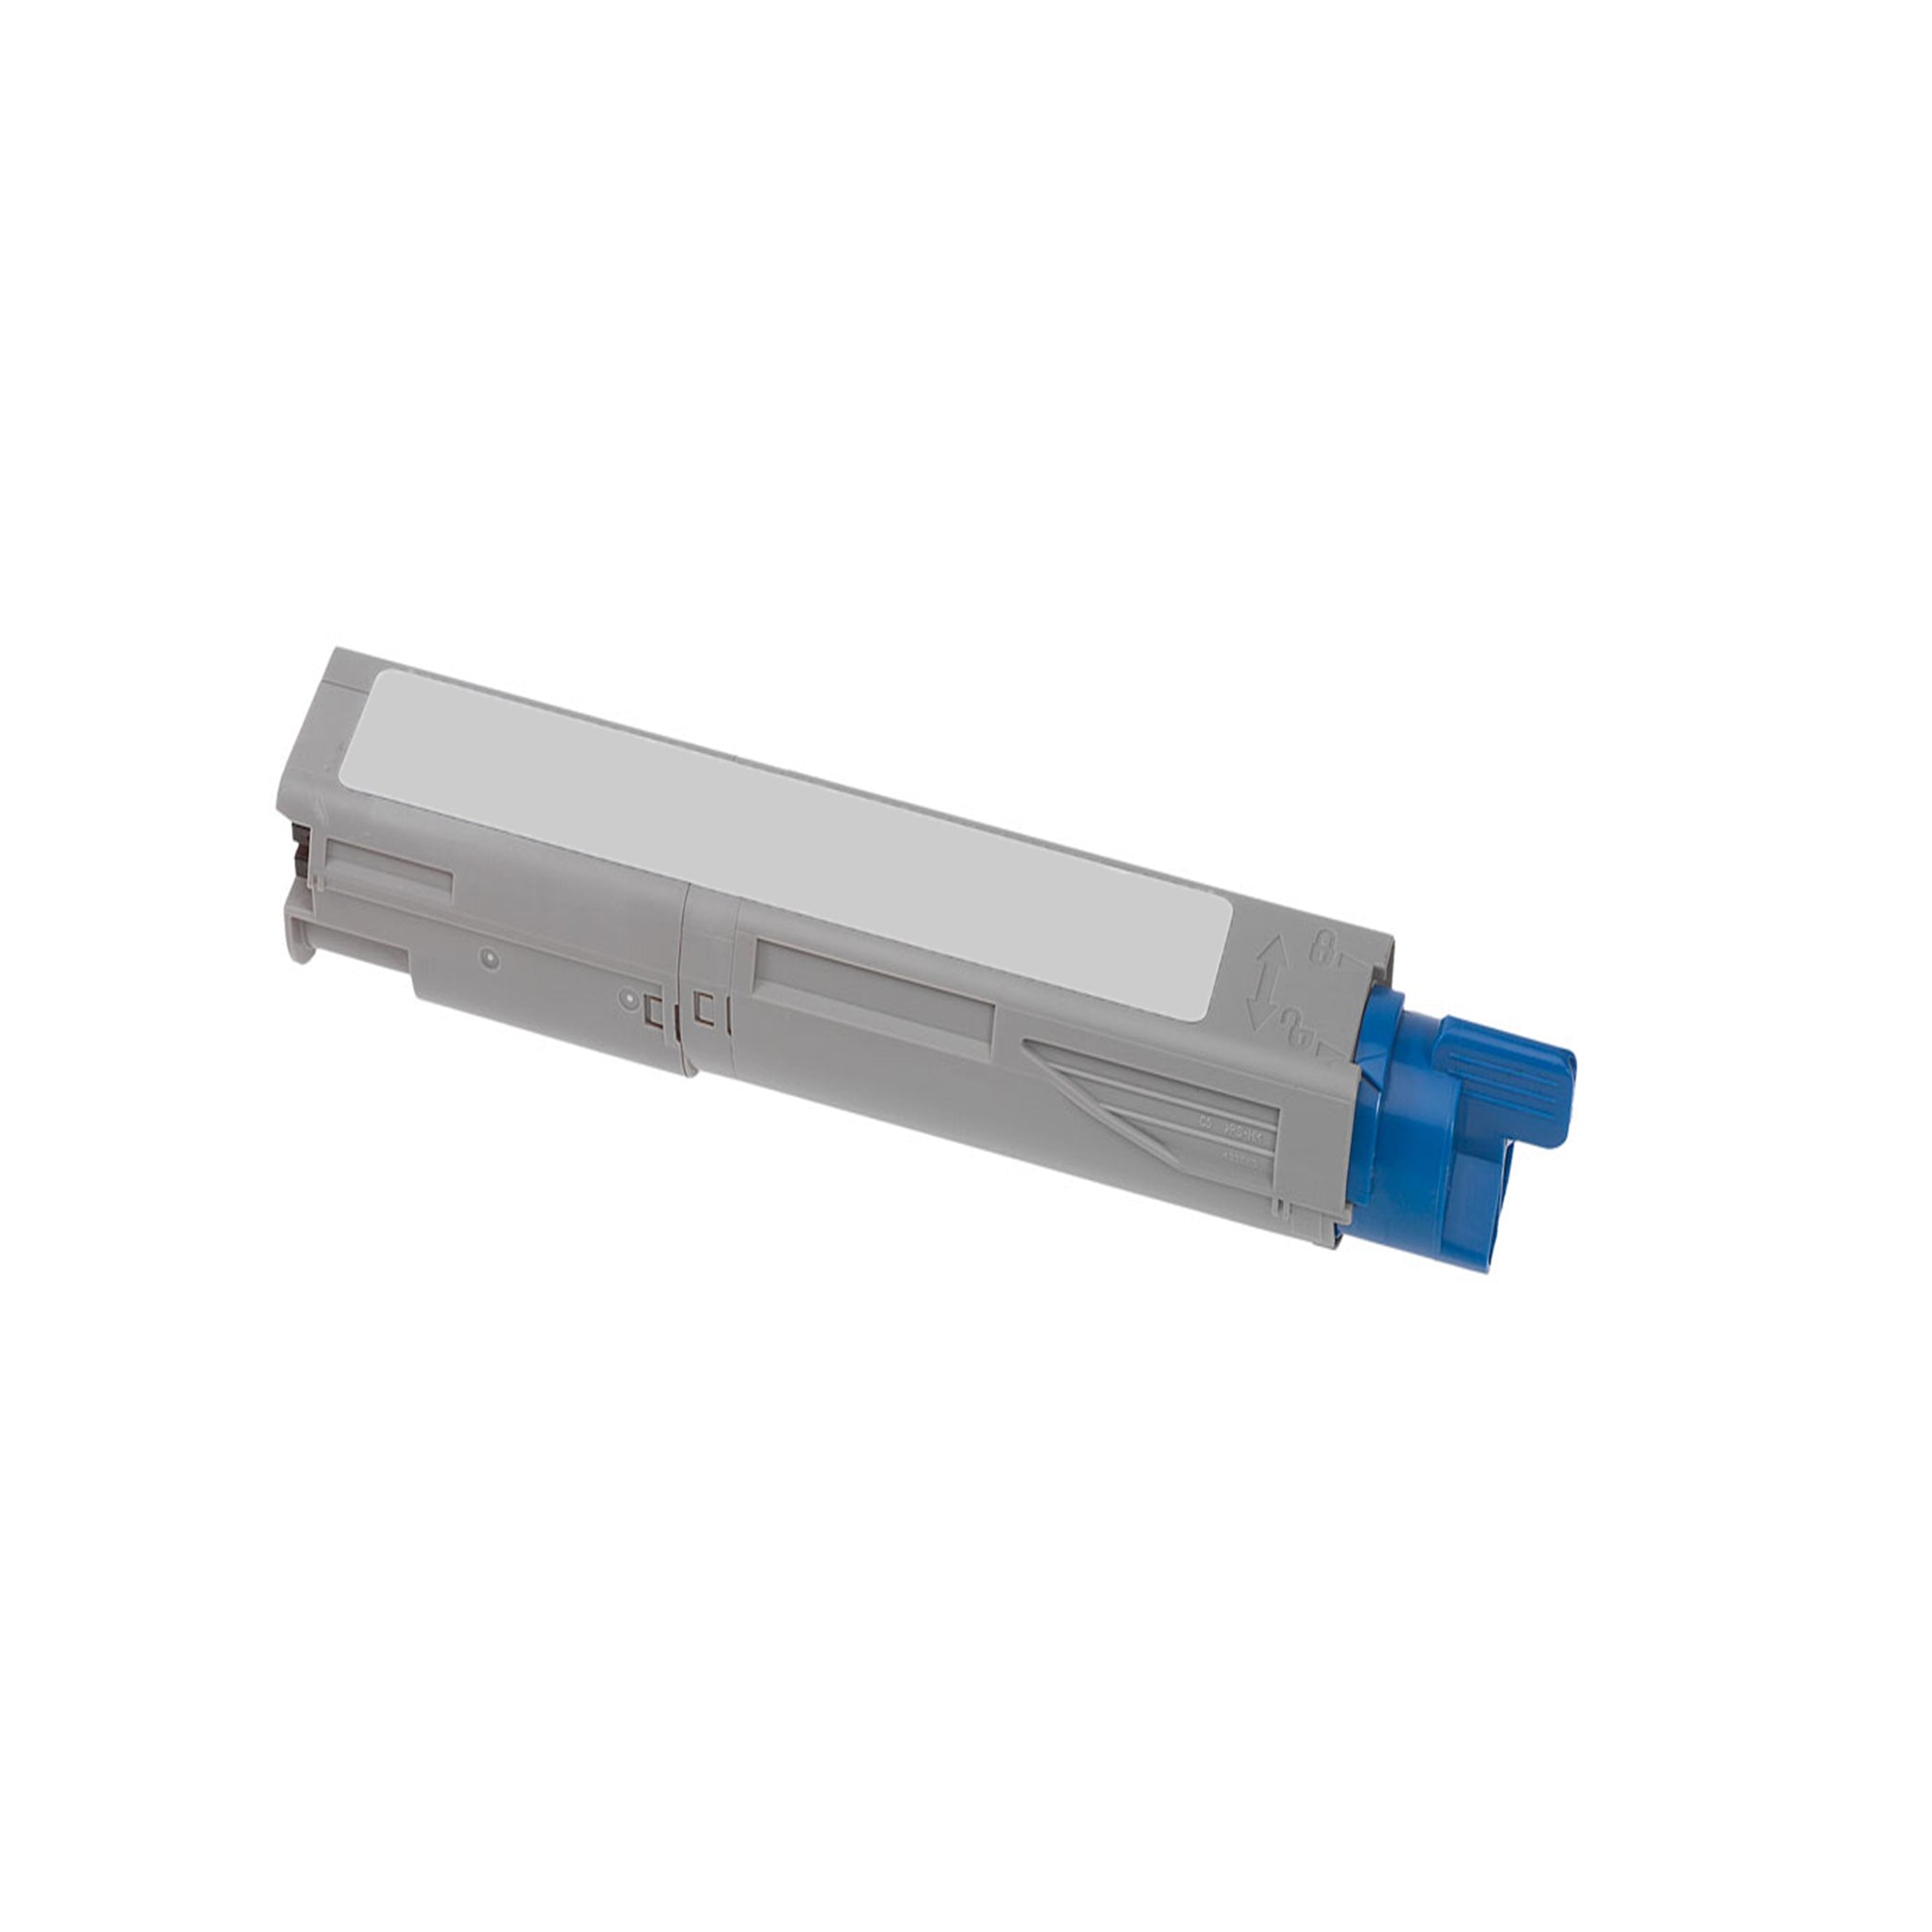 Toner cartridge compatible with OKI C3300/3400/3450/3520/3530/3600